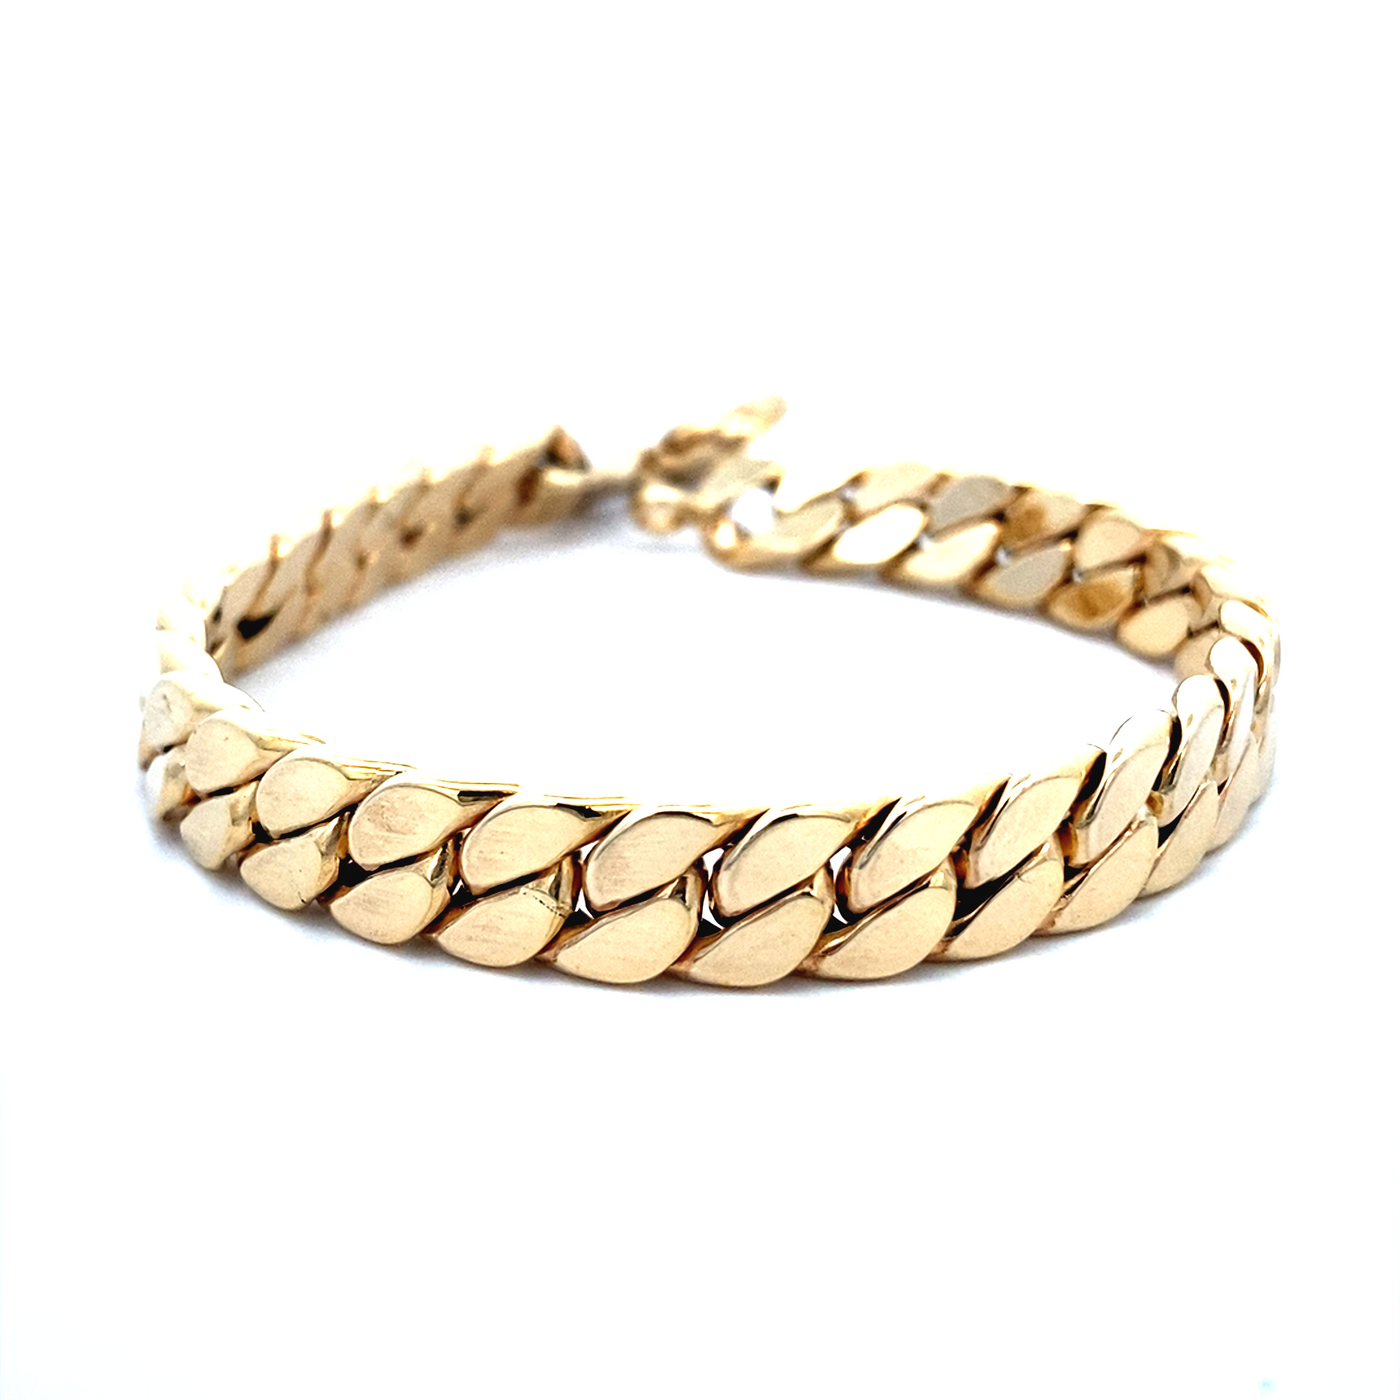 14 Karat Yellow Gold Curb Link Bracelet